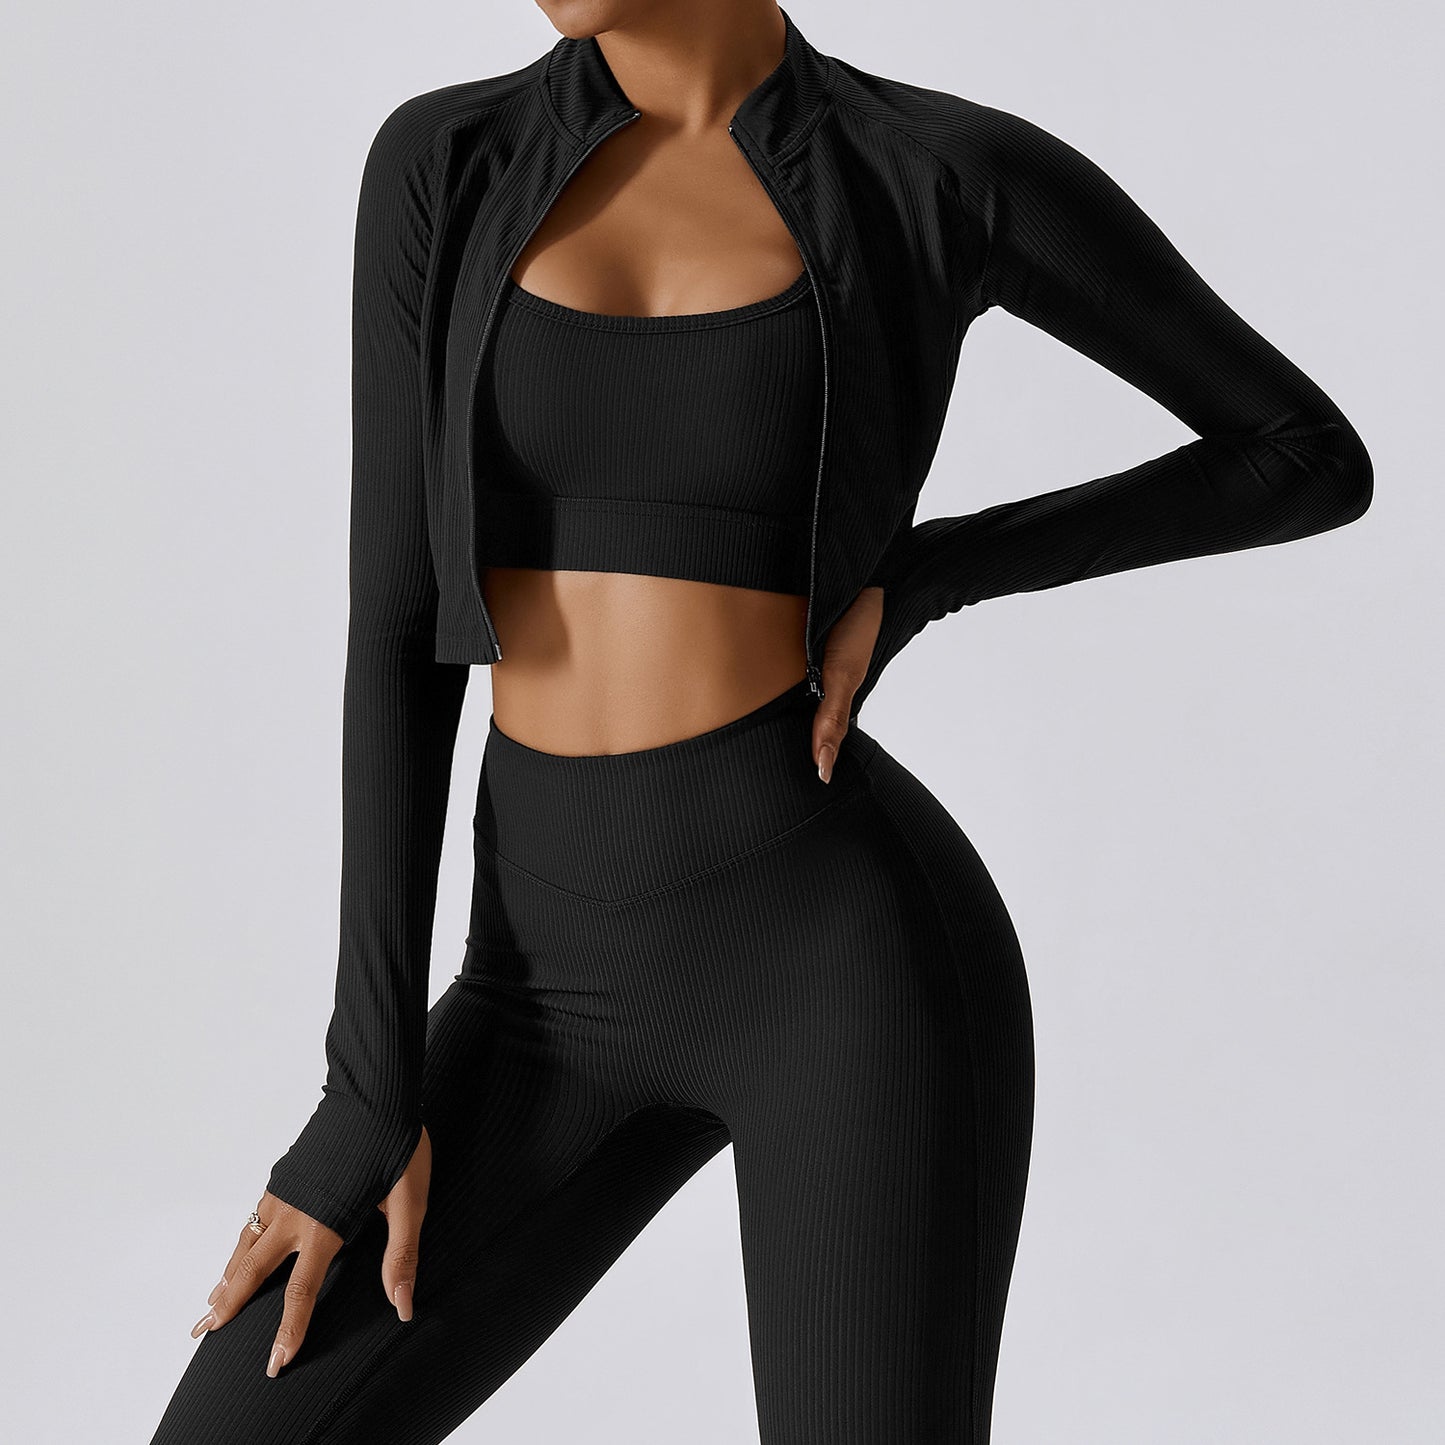 Autumn Quick Drying Long Sleeved Yoga Coat Thread Zipper Workout Clothes Top Women Running Exercise Coat